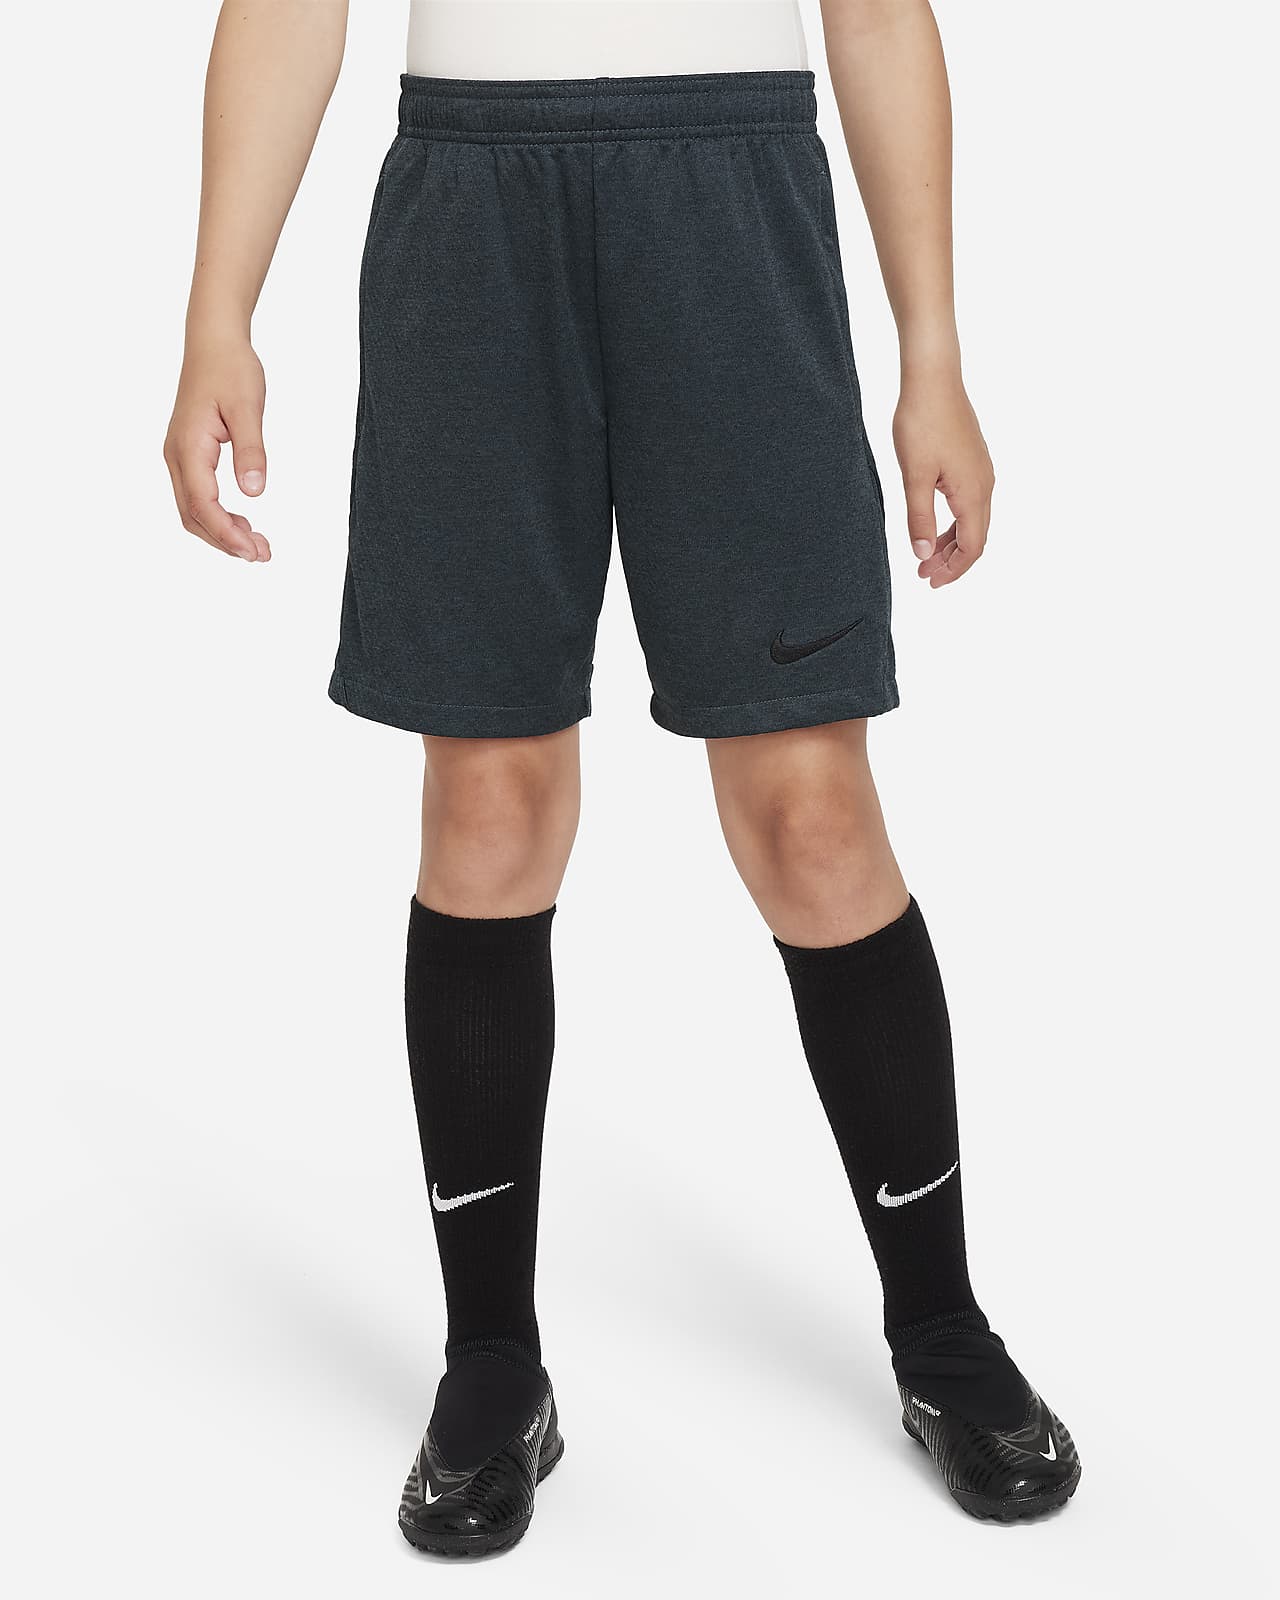 Nike Dri-FIT Academy Shorts. Big Soccer Kids